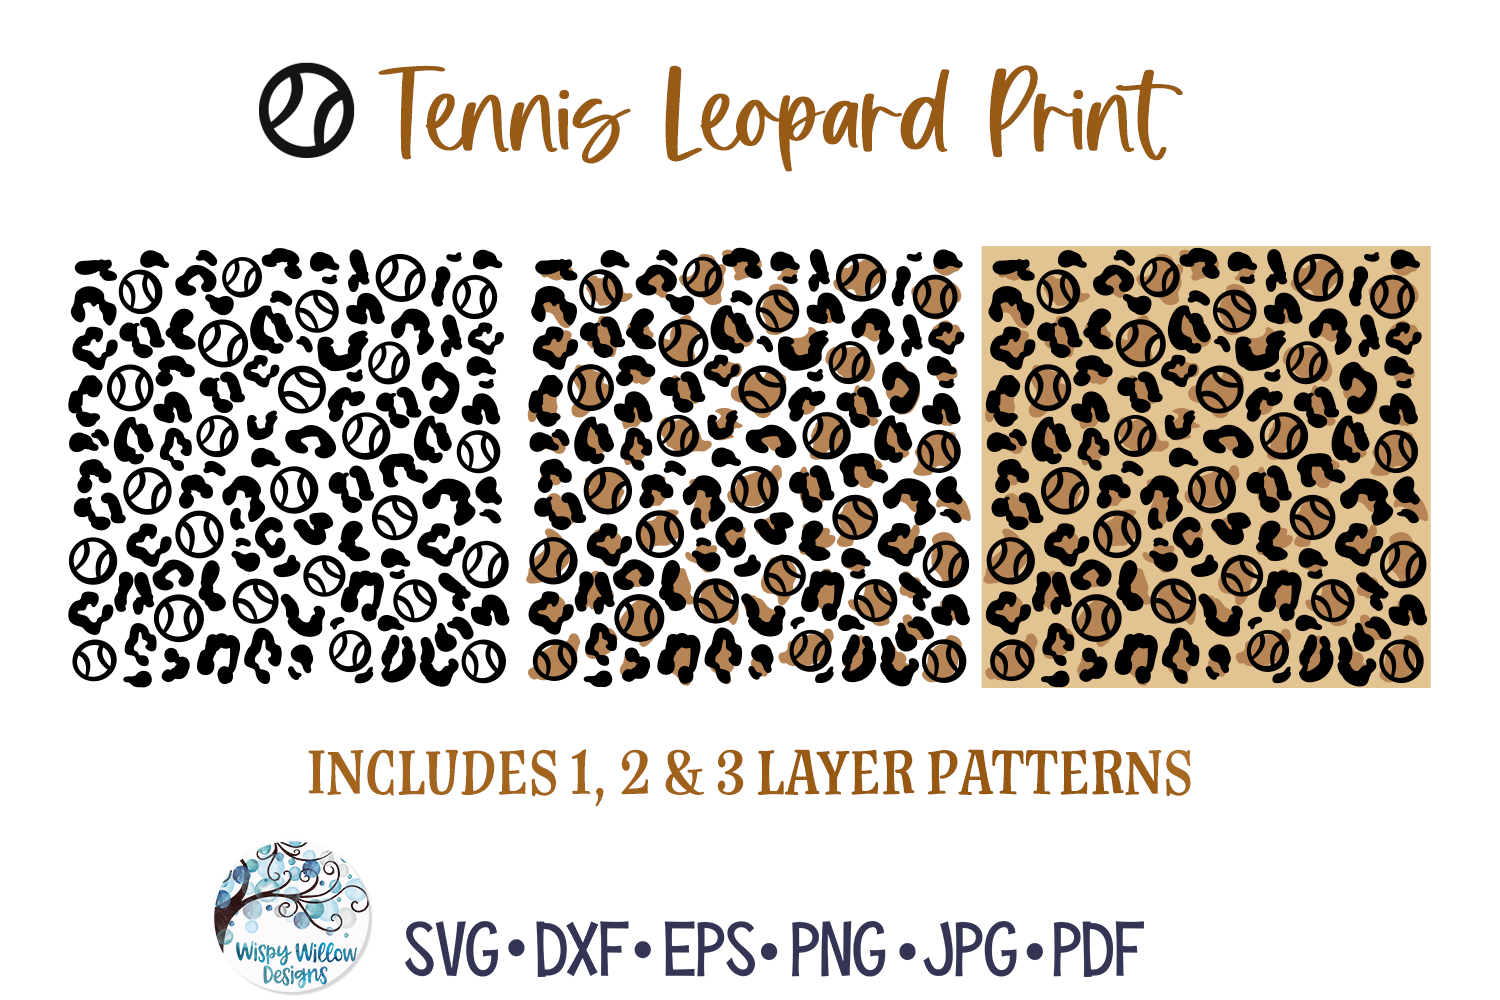 Tennis Leopard Print SVG | Sport Animal Pattern Wispy Willow Designs Company